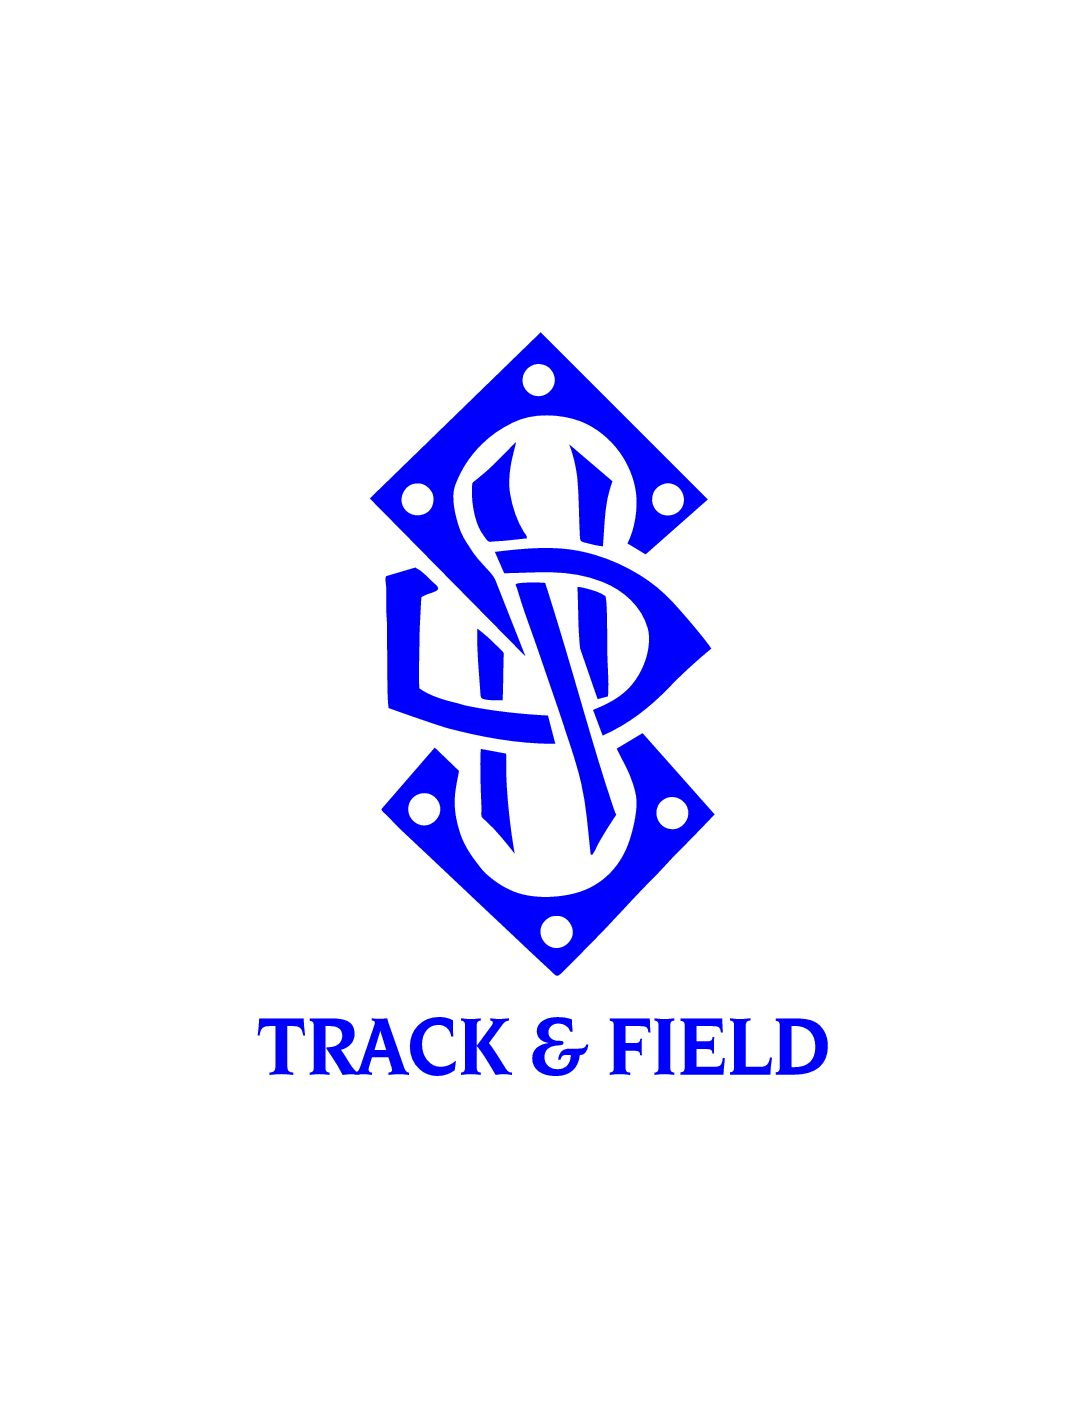 Notre Dame De Sion Track & Field